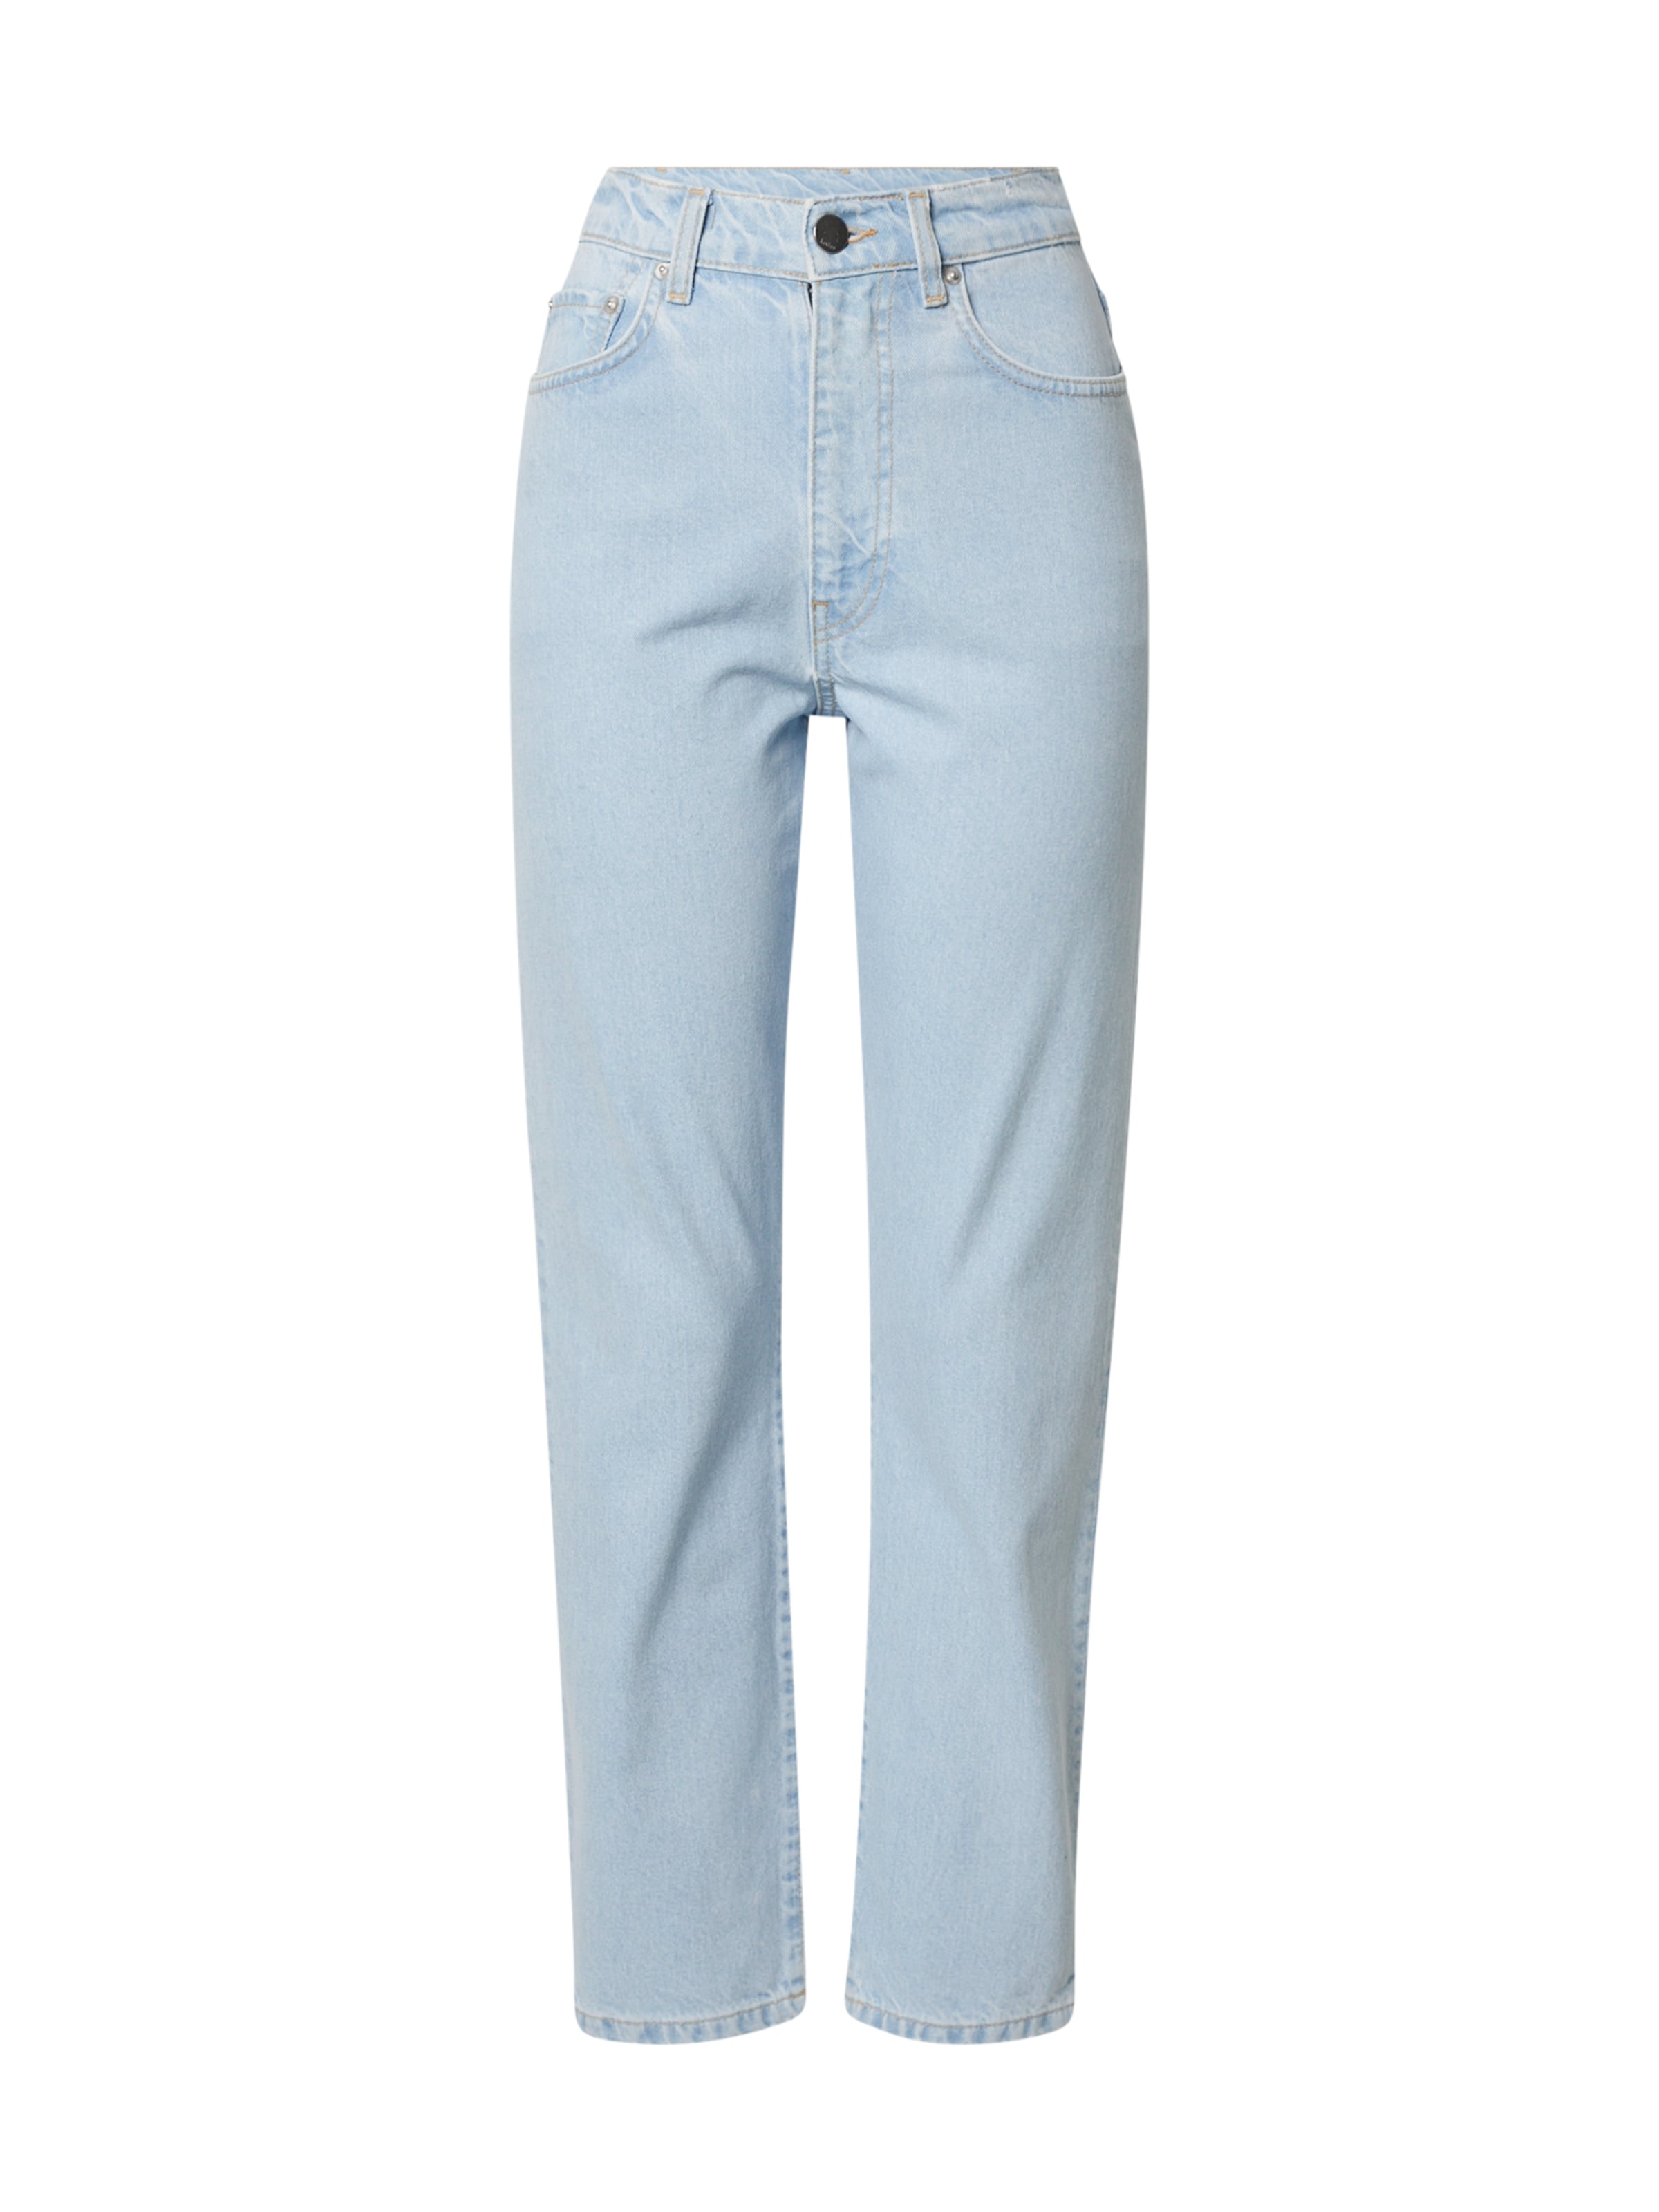 Jeans Jungbusch ABOUT YOU Donna Abbigliamento Pantaloni e jeans Jeans Jeans slim & sigaretta 